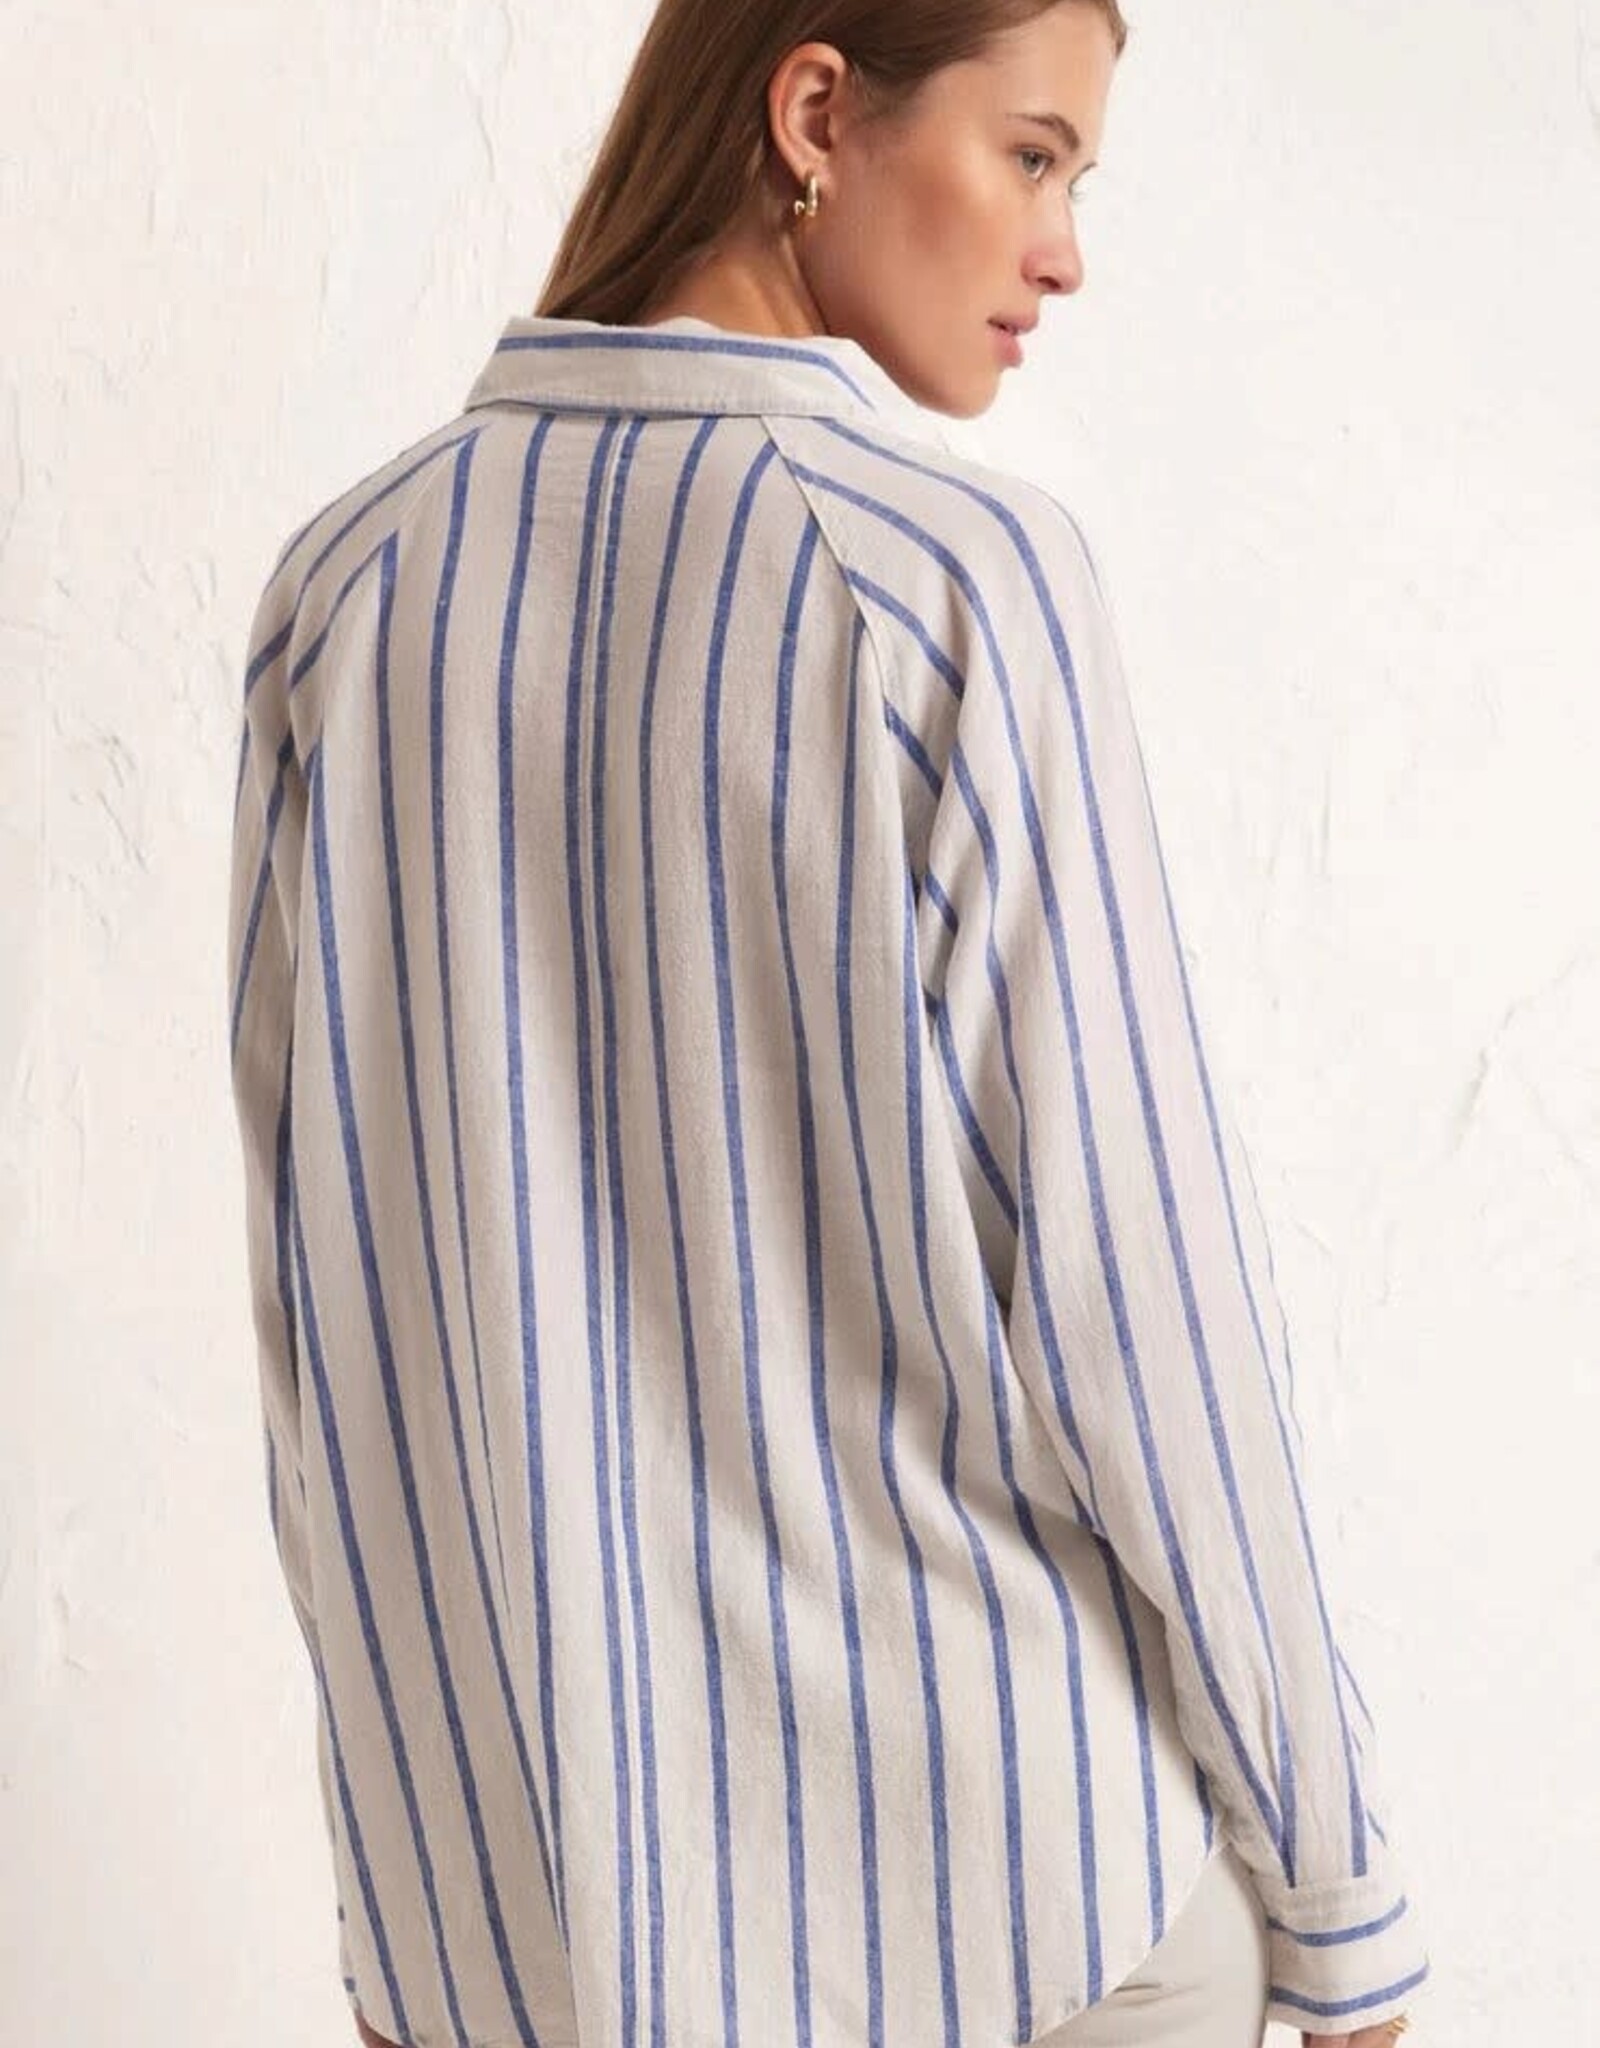 Z Supply Perfect Linen  Stripe Shirt